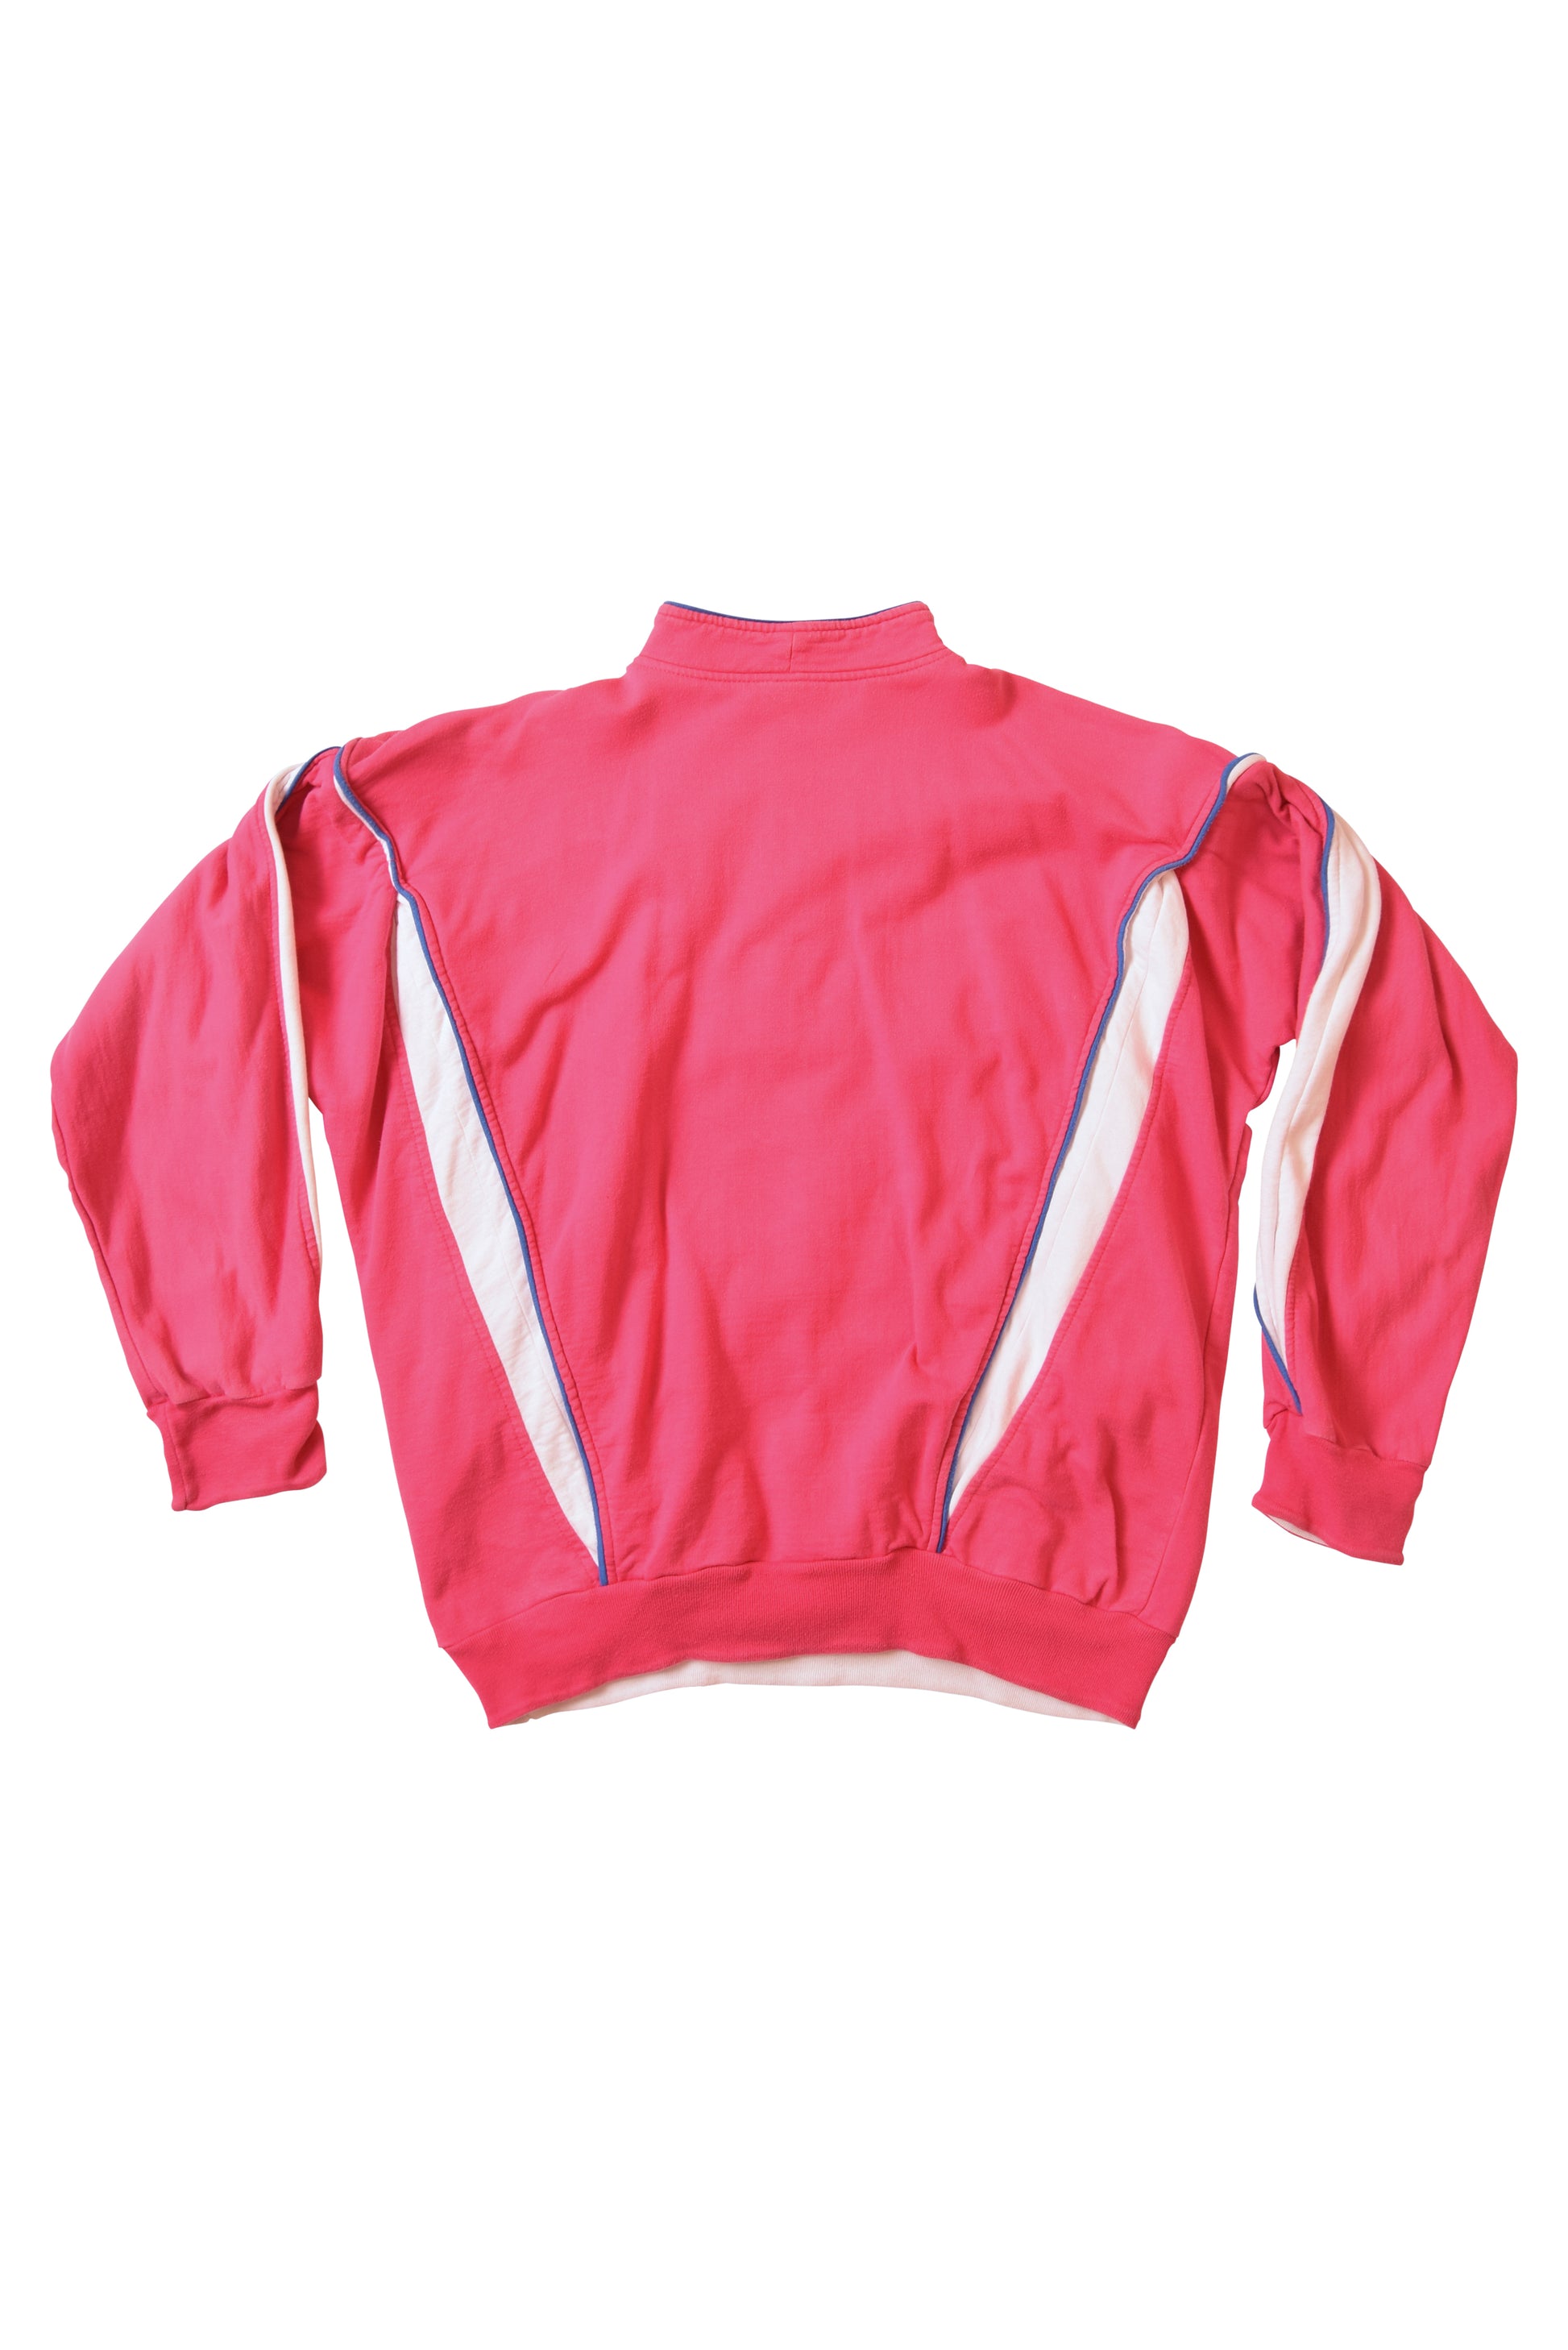 Vintage Adidas Sweatshirt 90's Pink Made in U.K. Size M-L